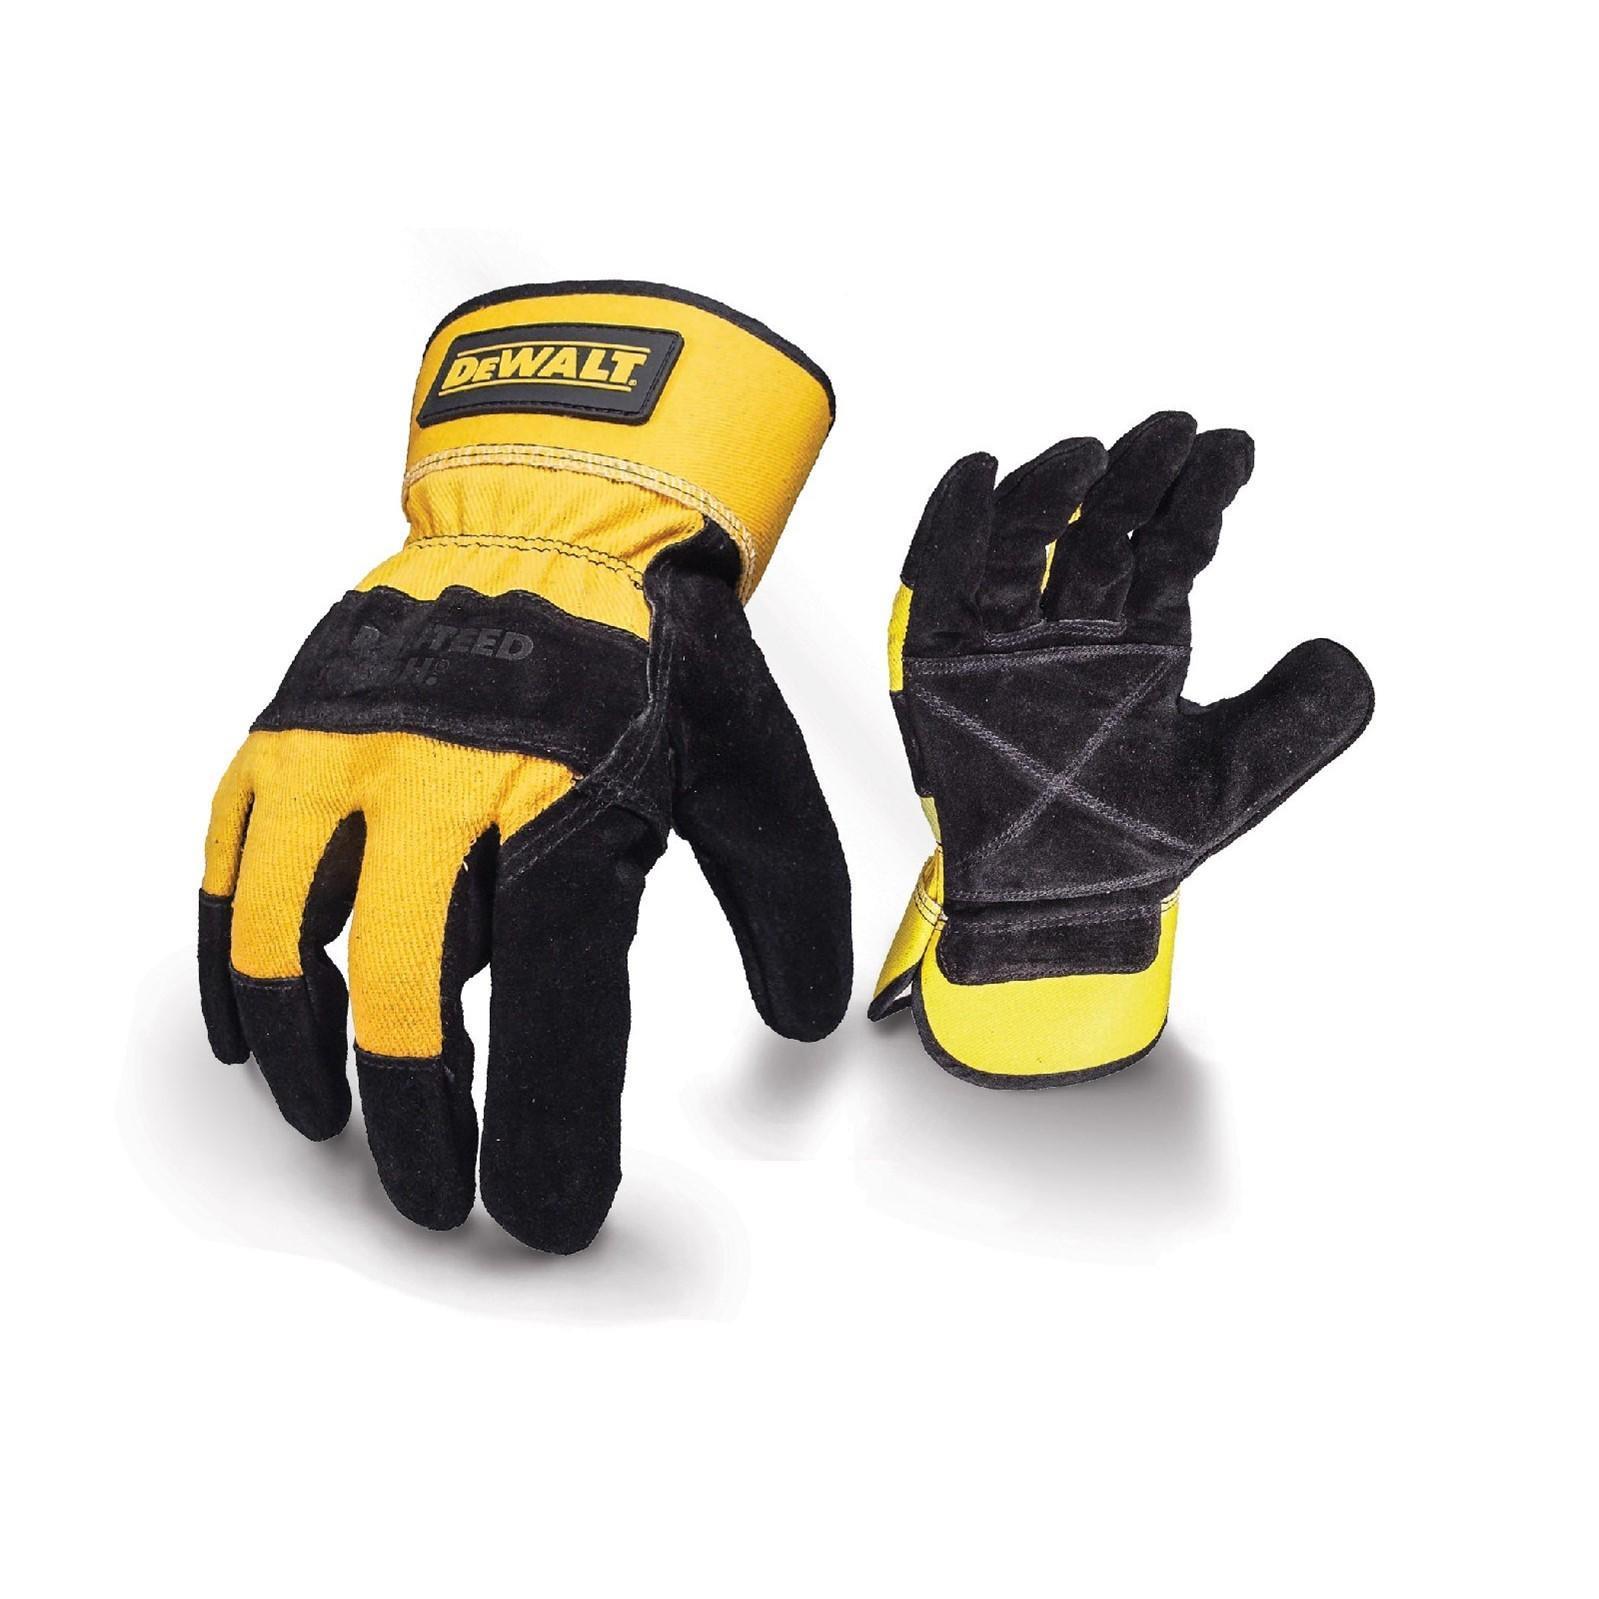 DeWalt Rigger Pig Skin Leather Gloves (Black/Yellow) (One Size)